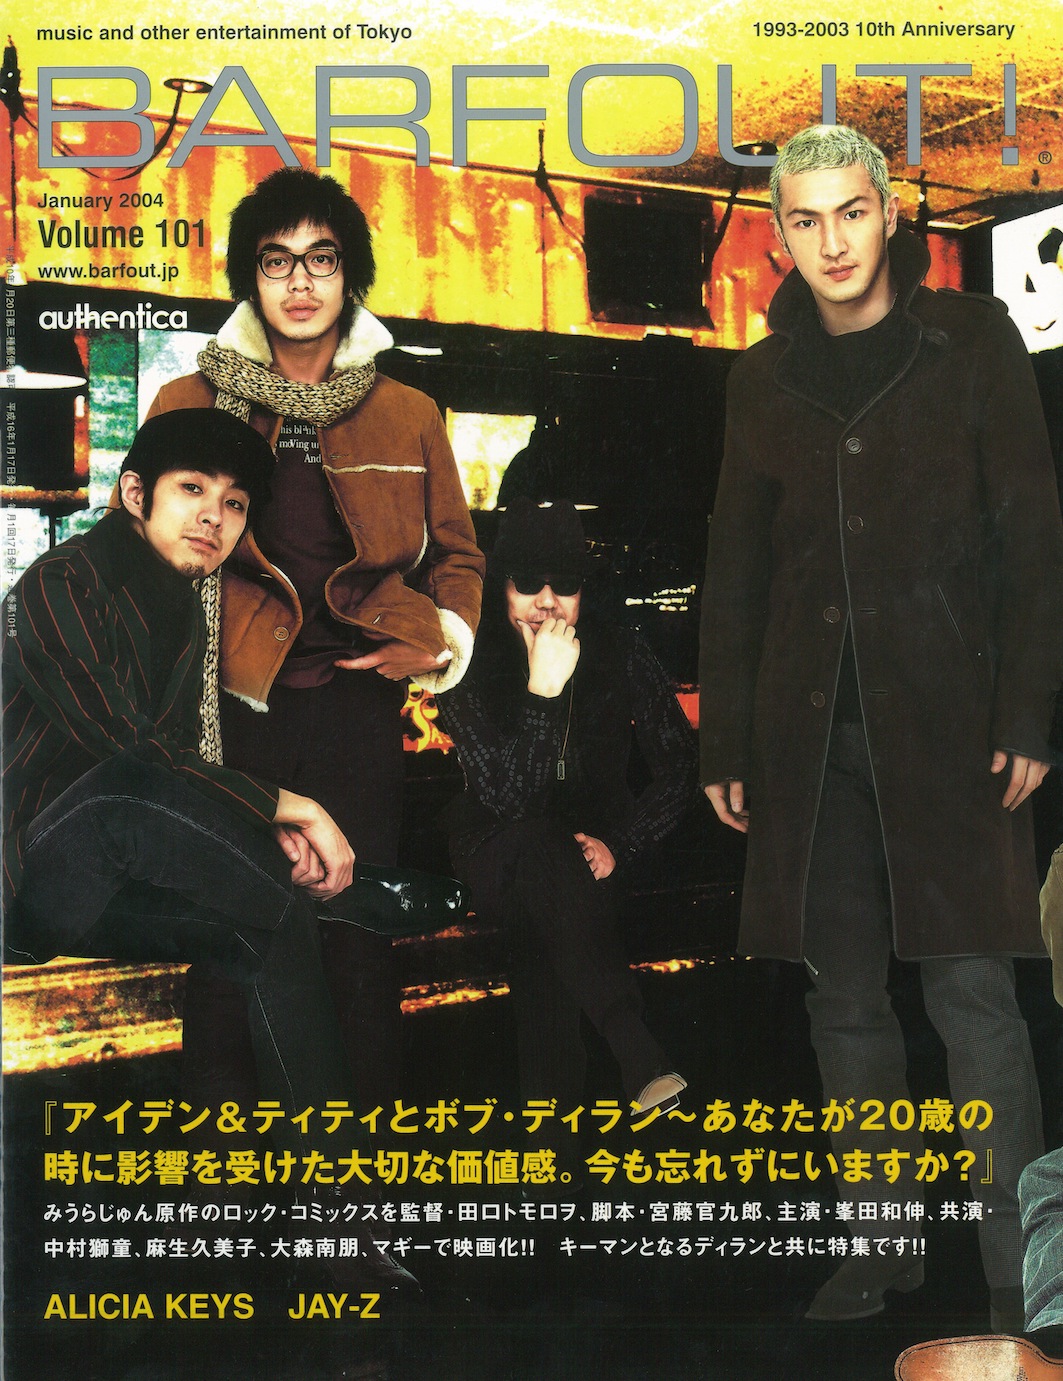 JANUARY 2004 VOLUME 101